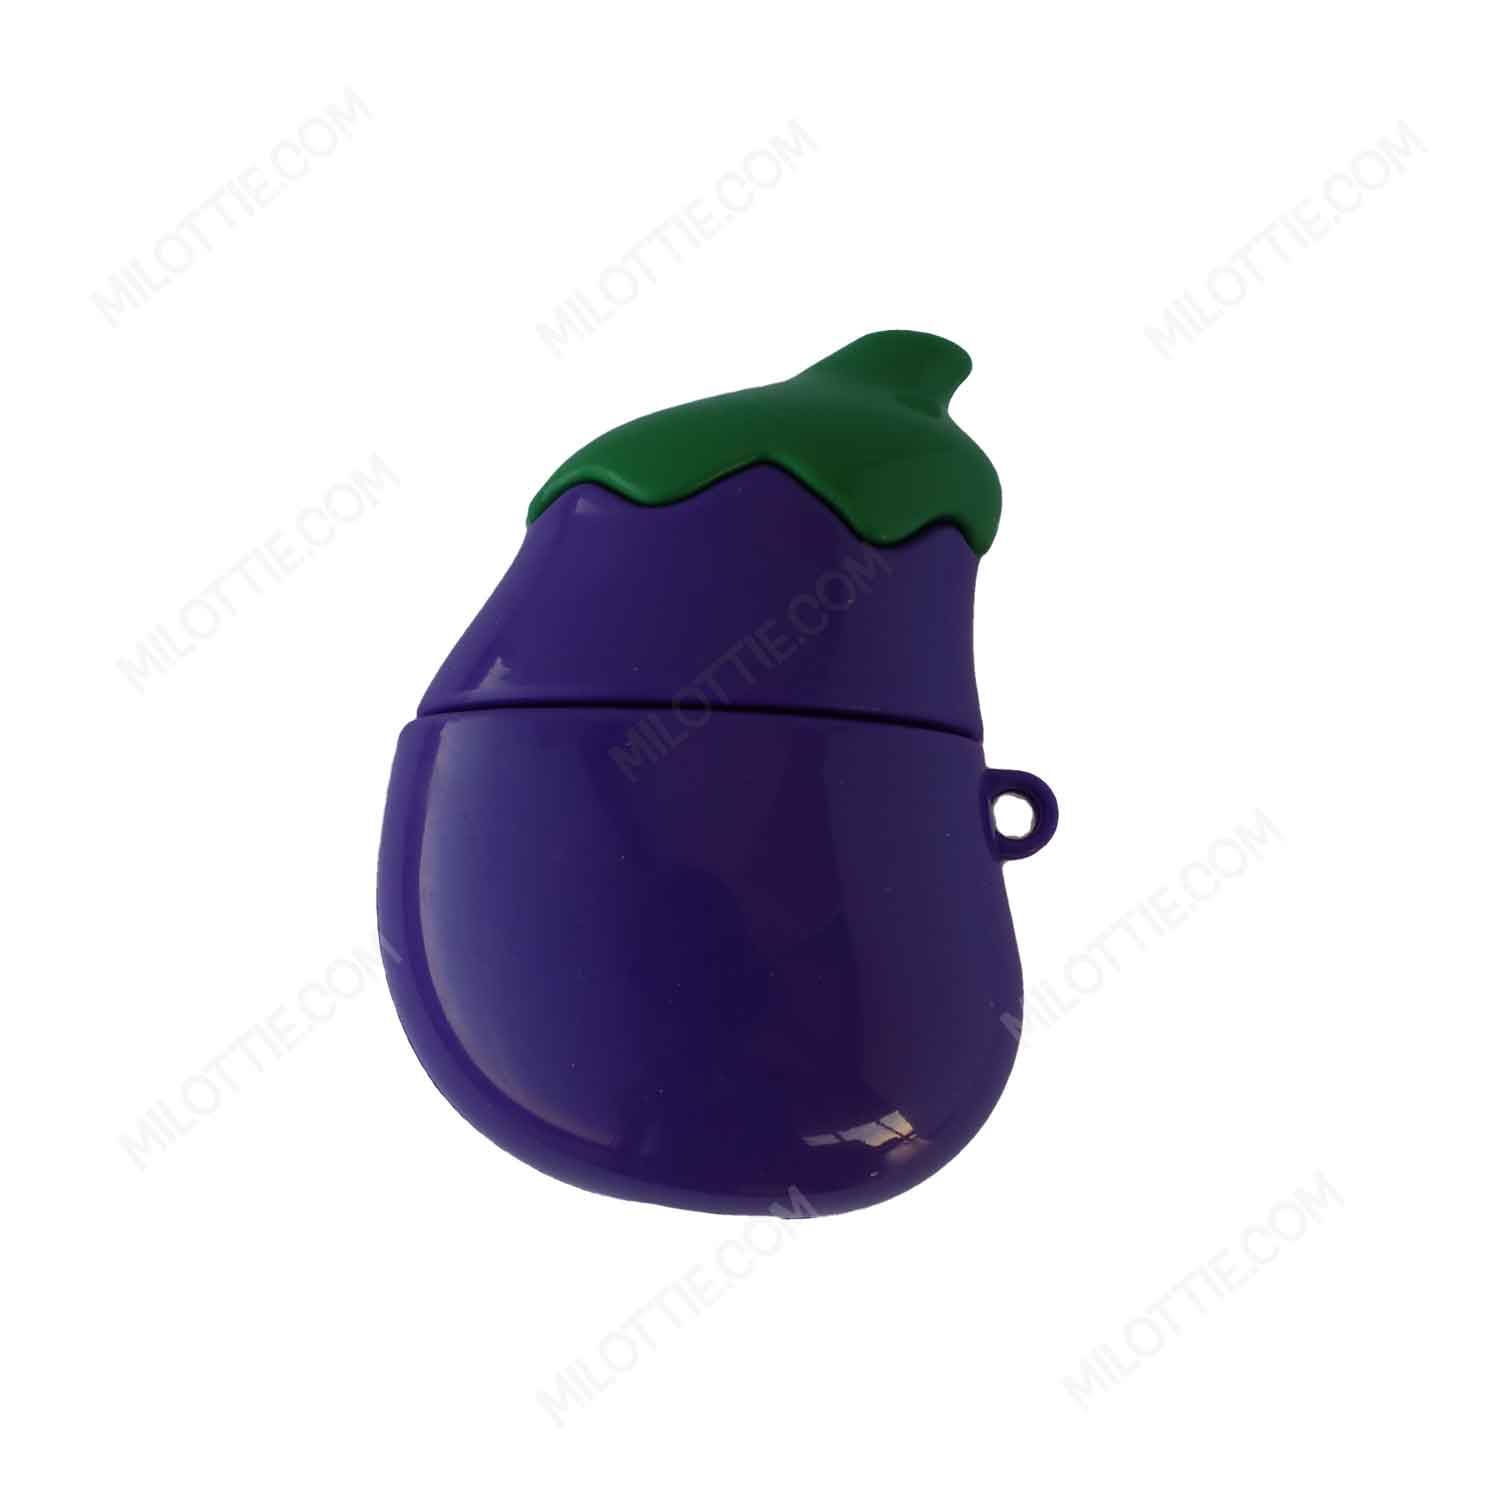 Eggplant Emoji Airpods Case